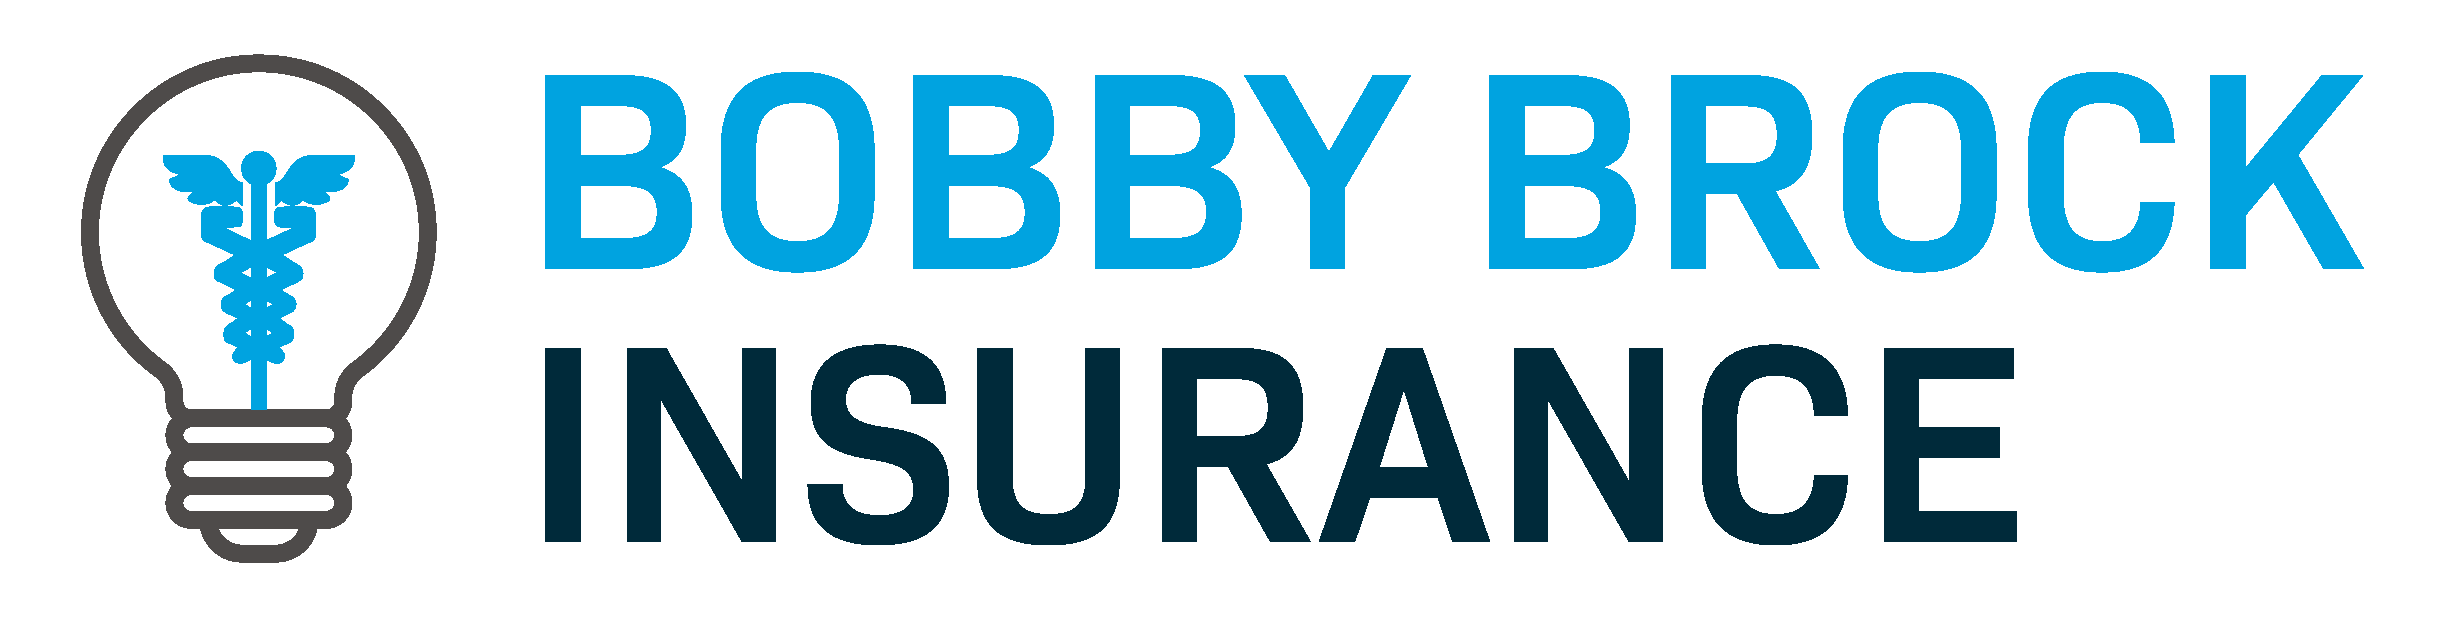 Bobby Brock Insurance | Tupelo, MS